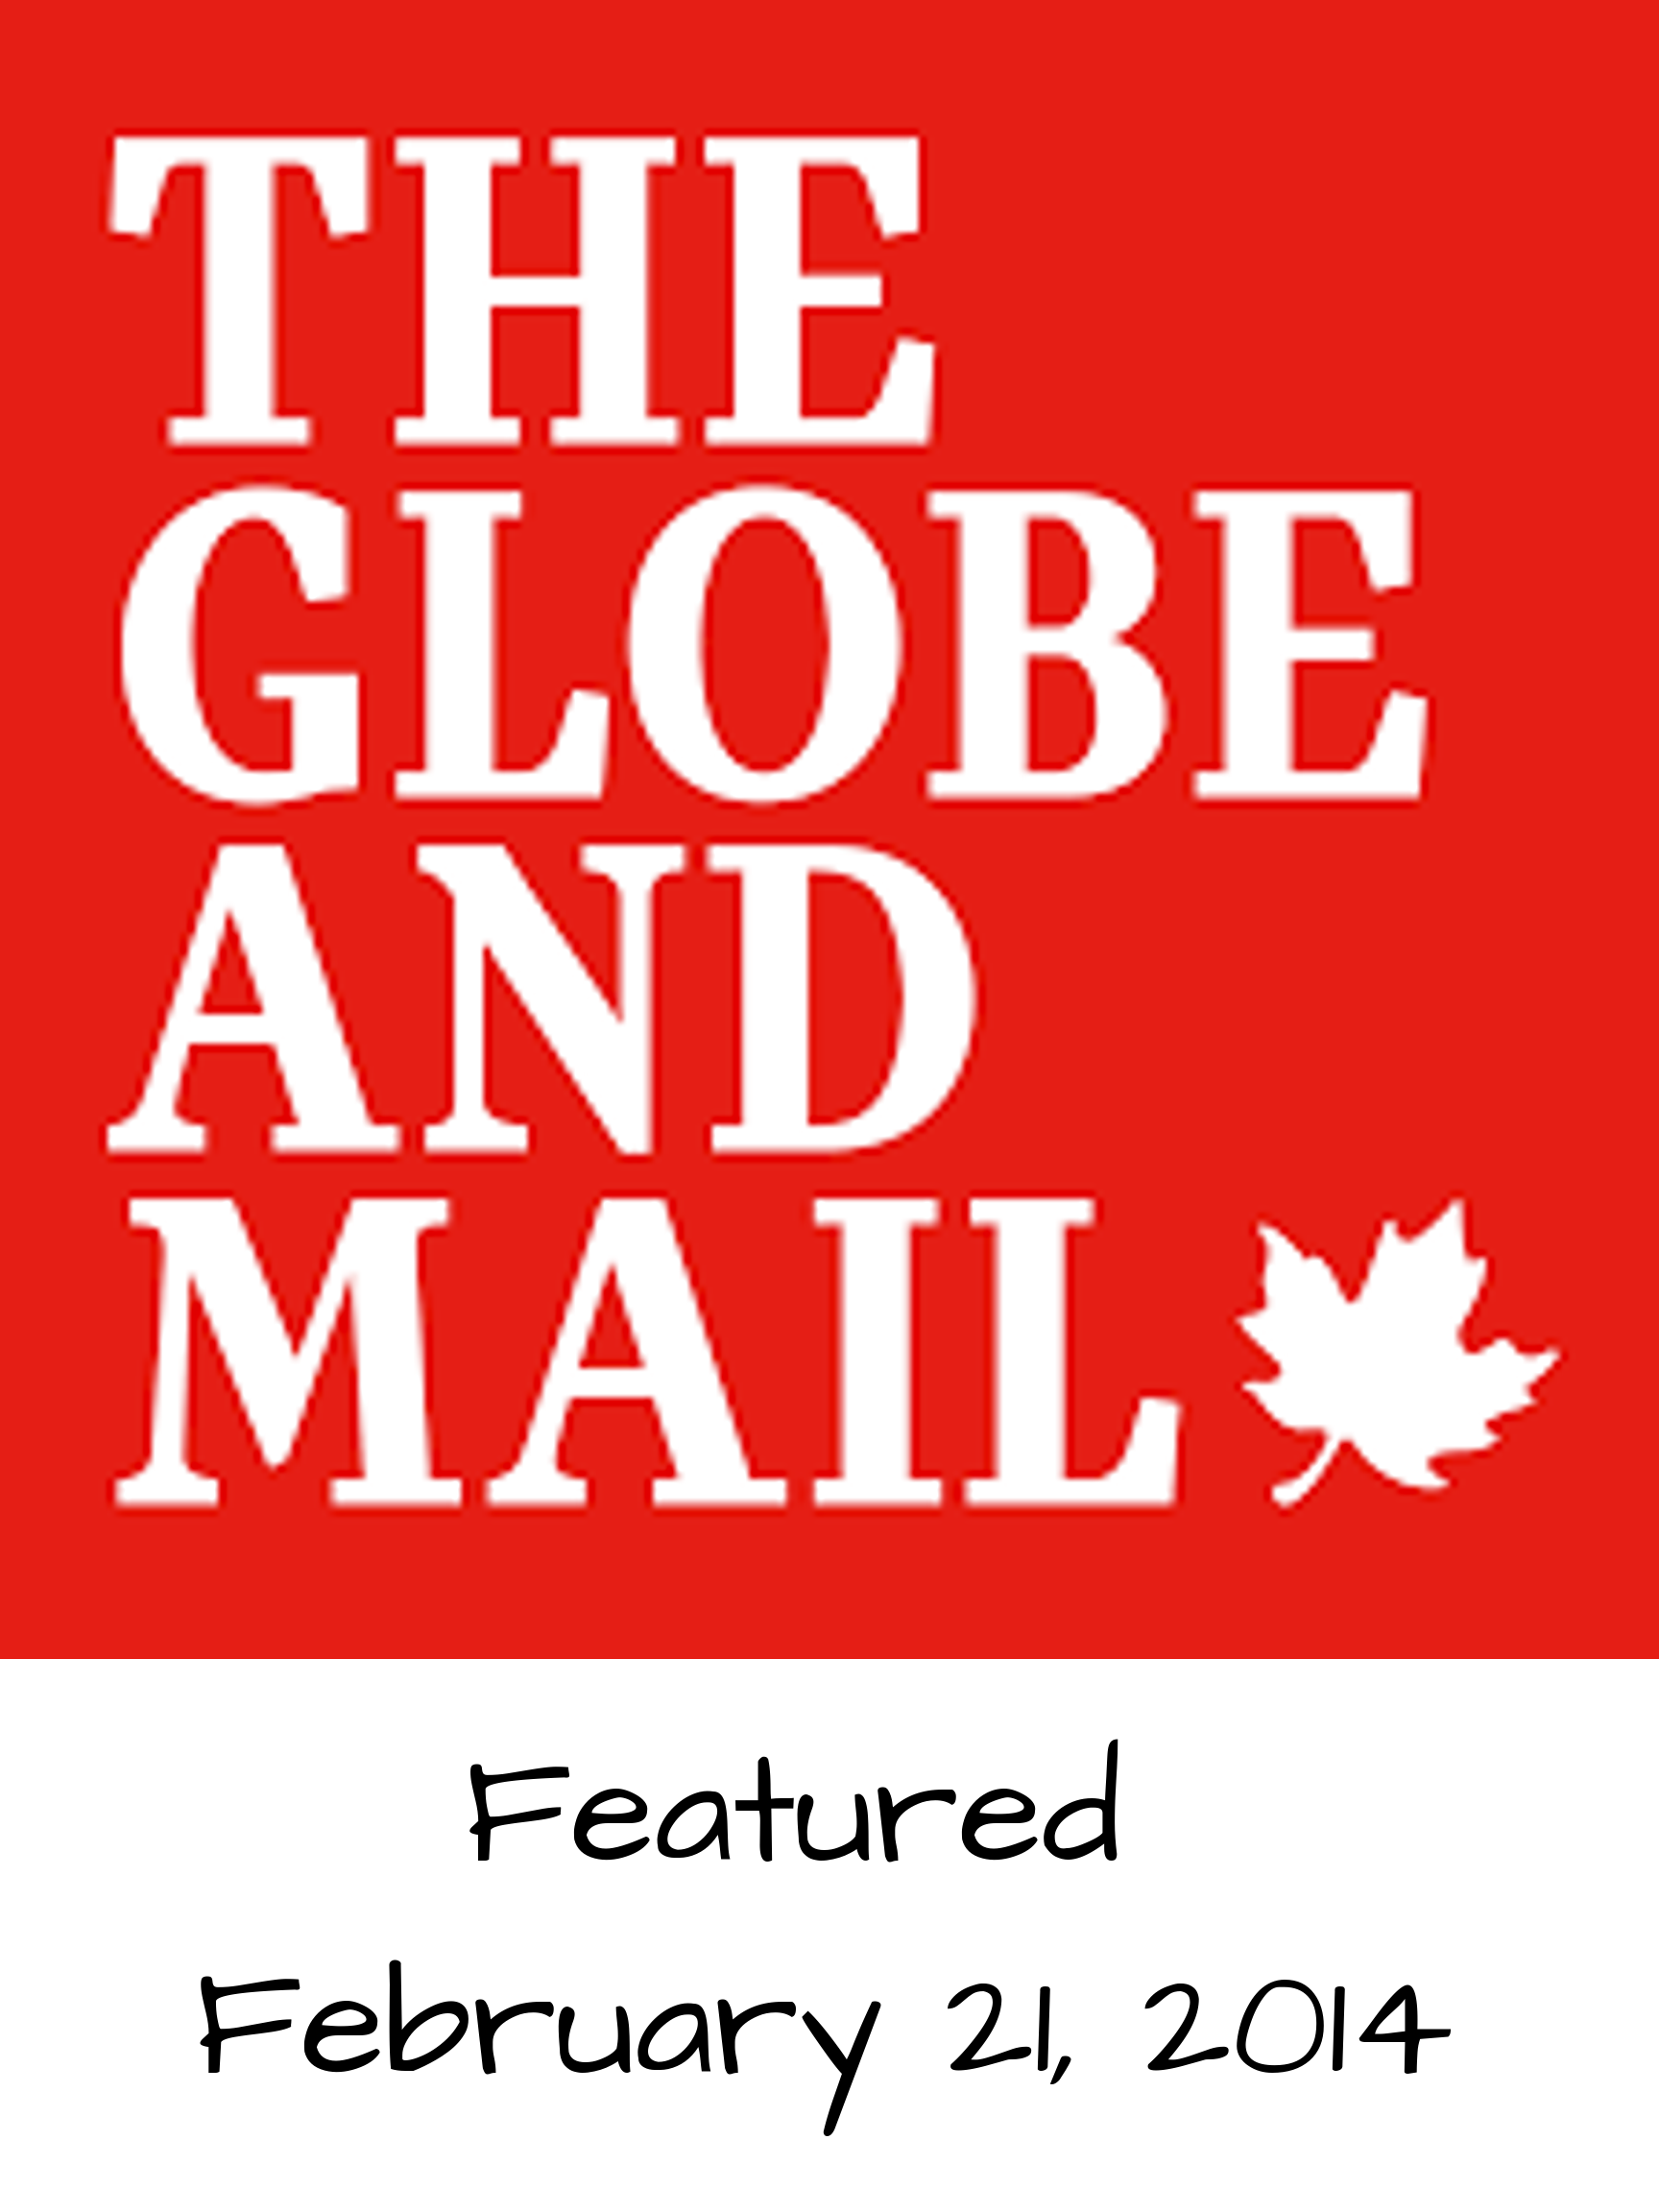 Globe and mail